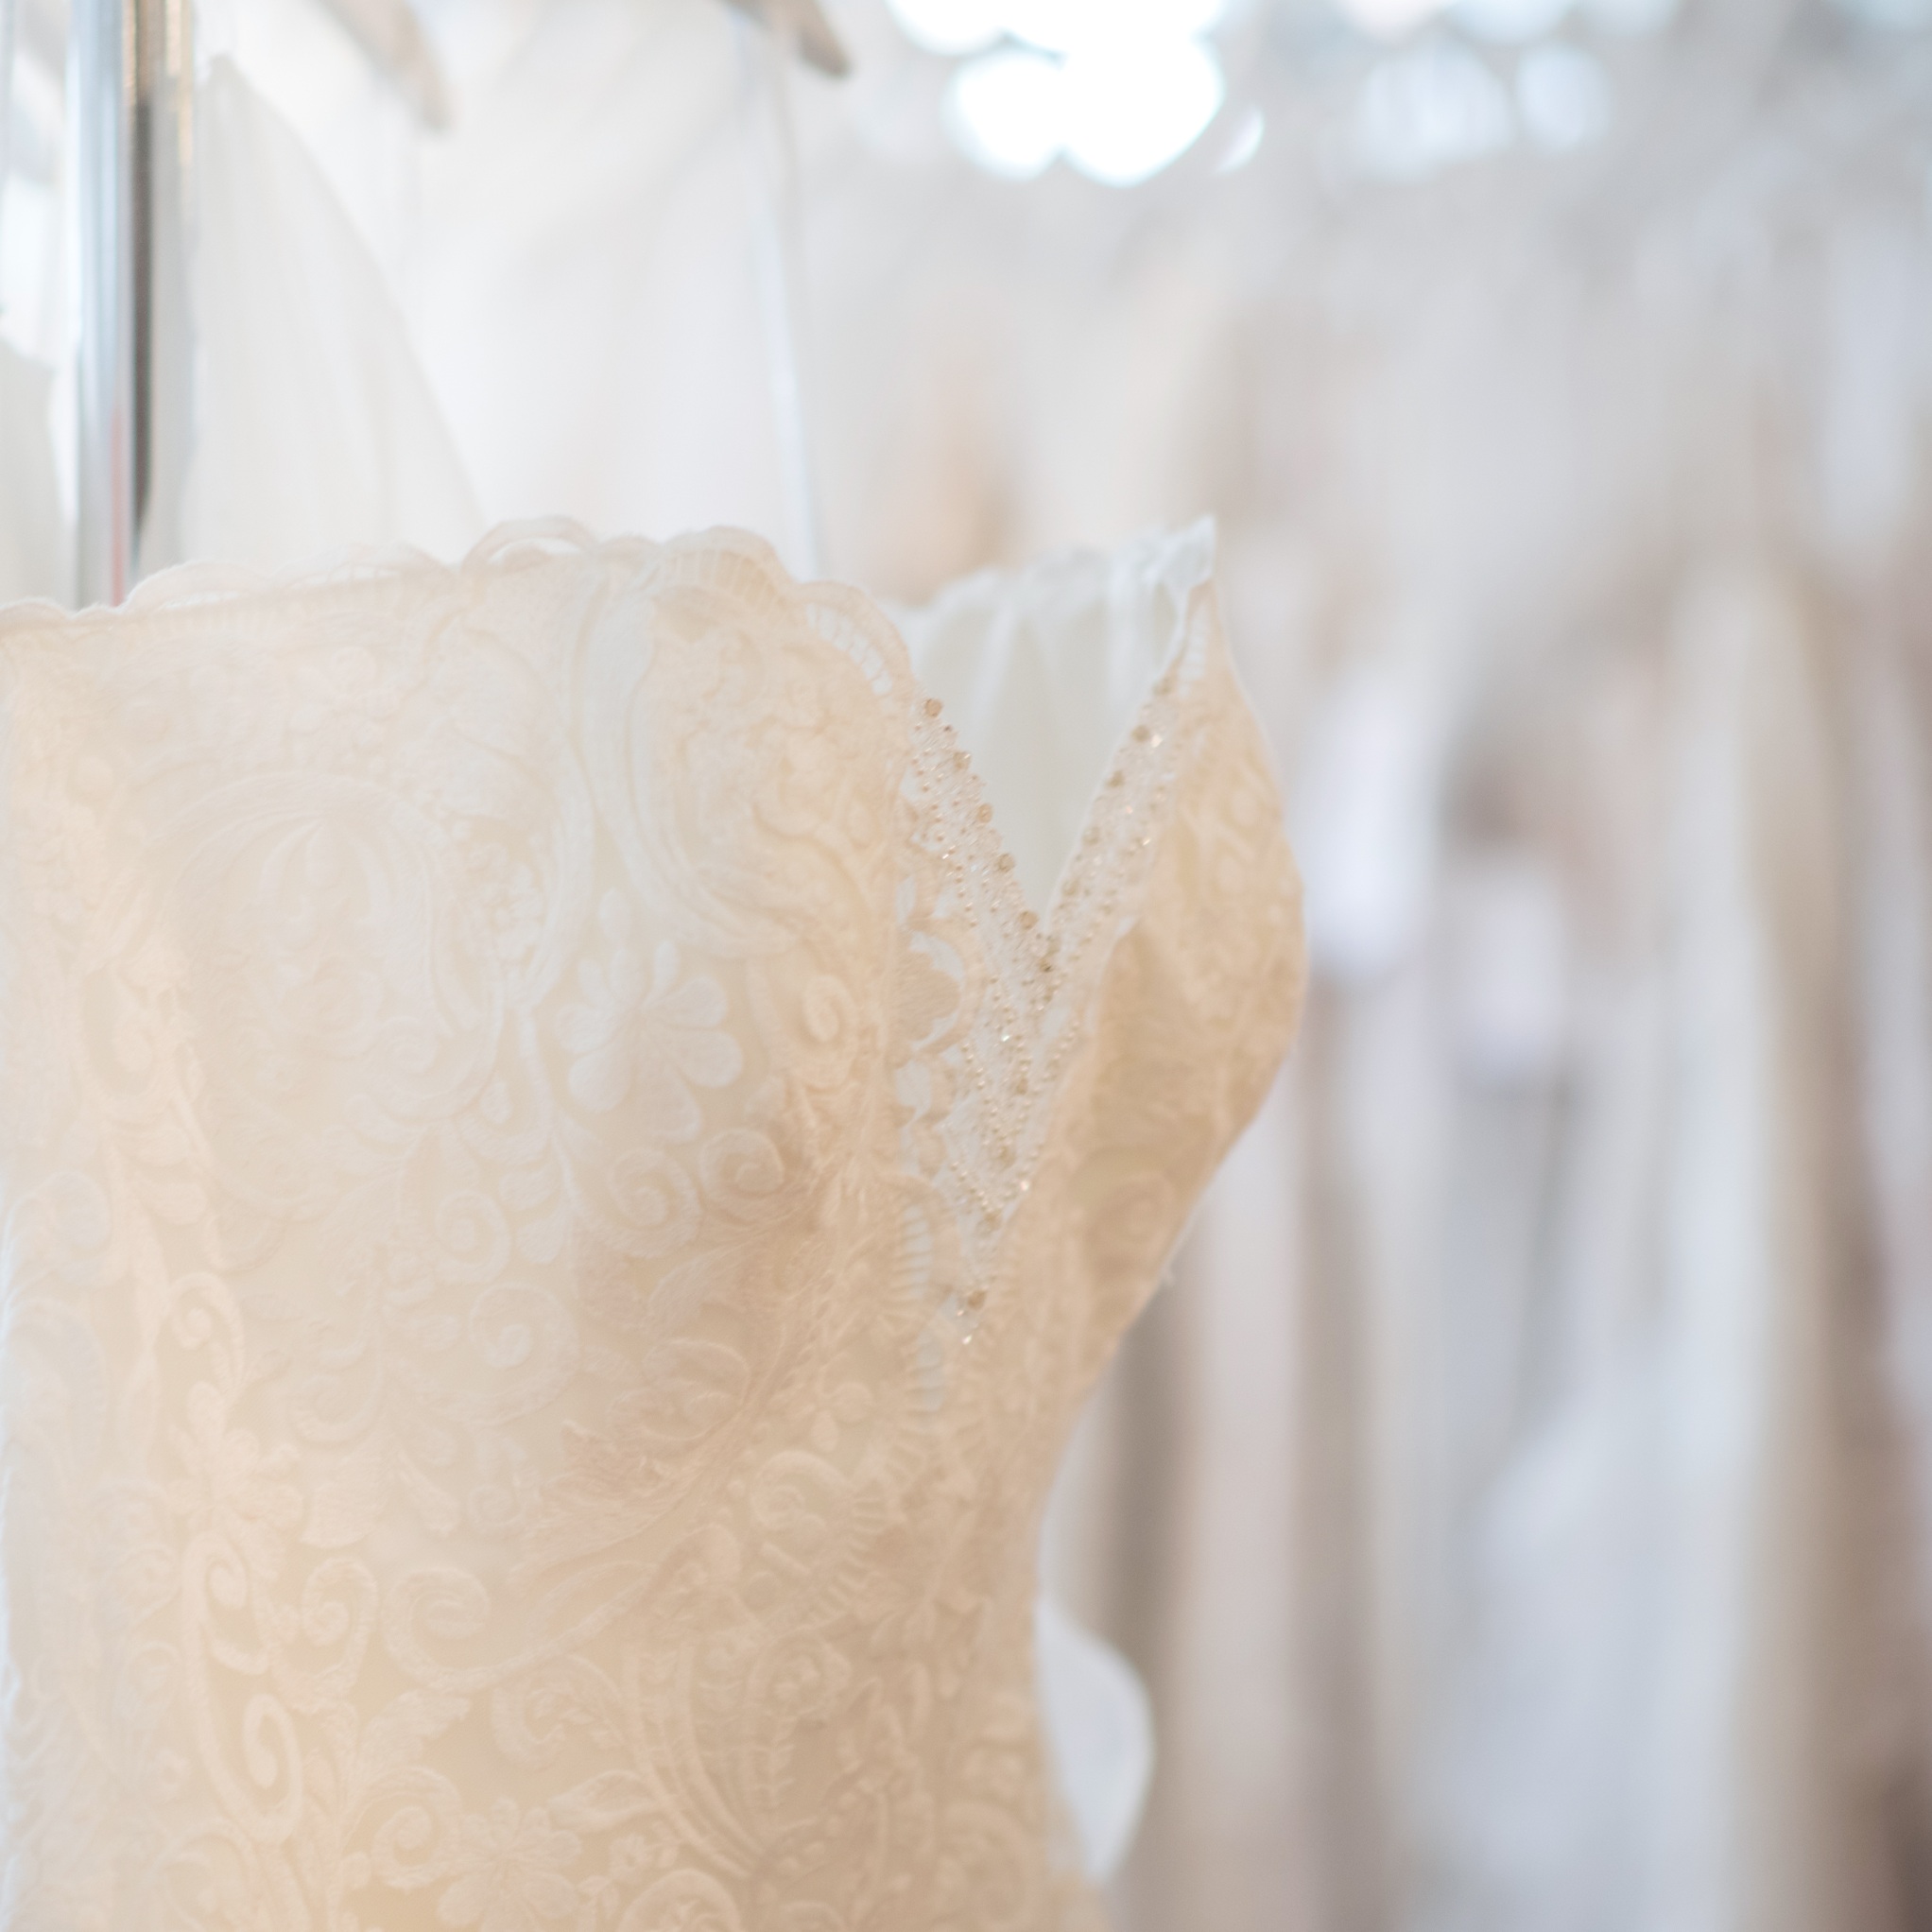 AFFORDABLE DESIGNER WEDDING DRESSES — The Wedding Embassy